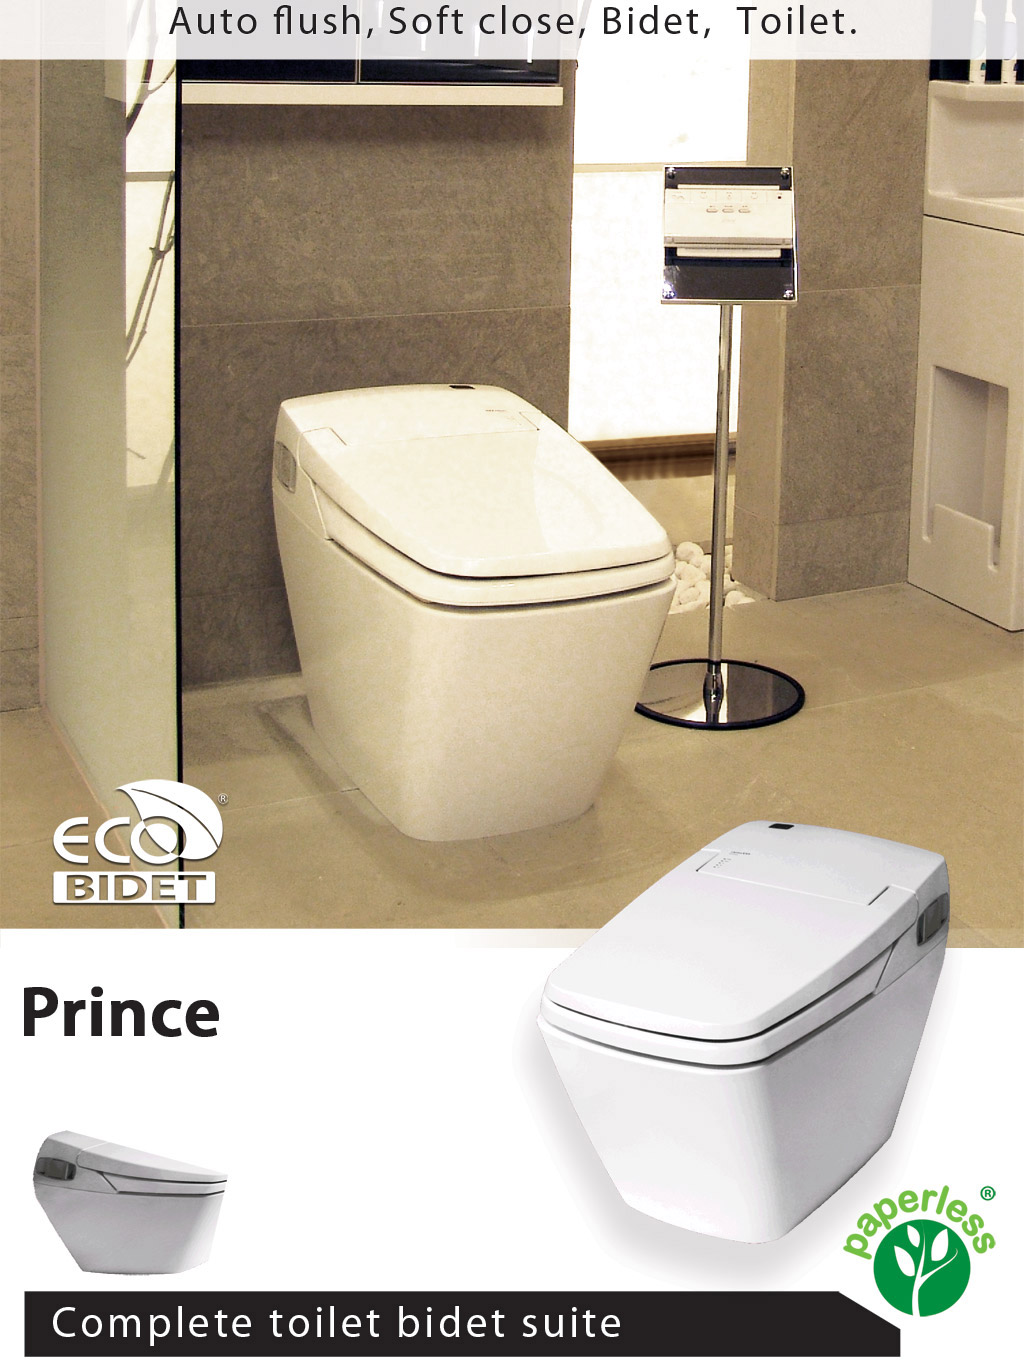 Prince Luxury Eco Bidet  Page 1